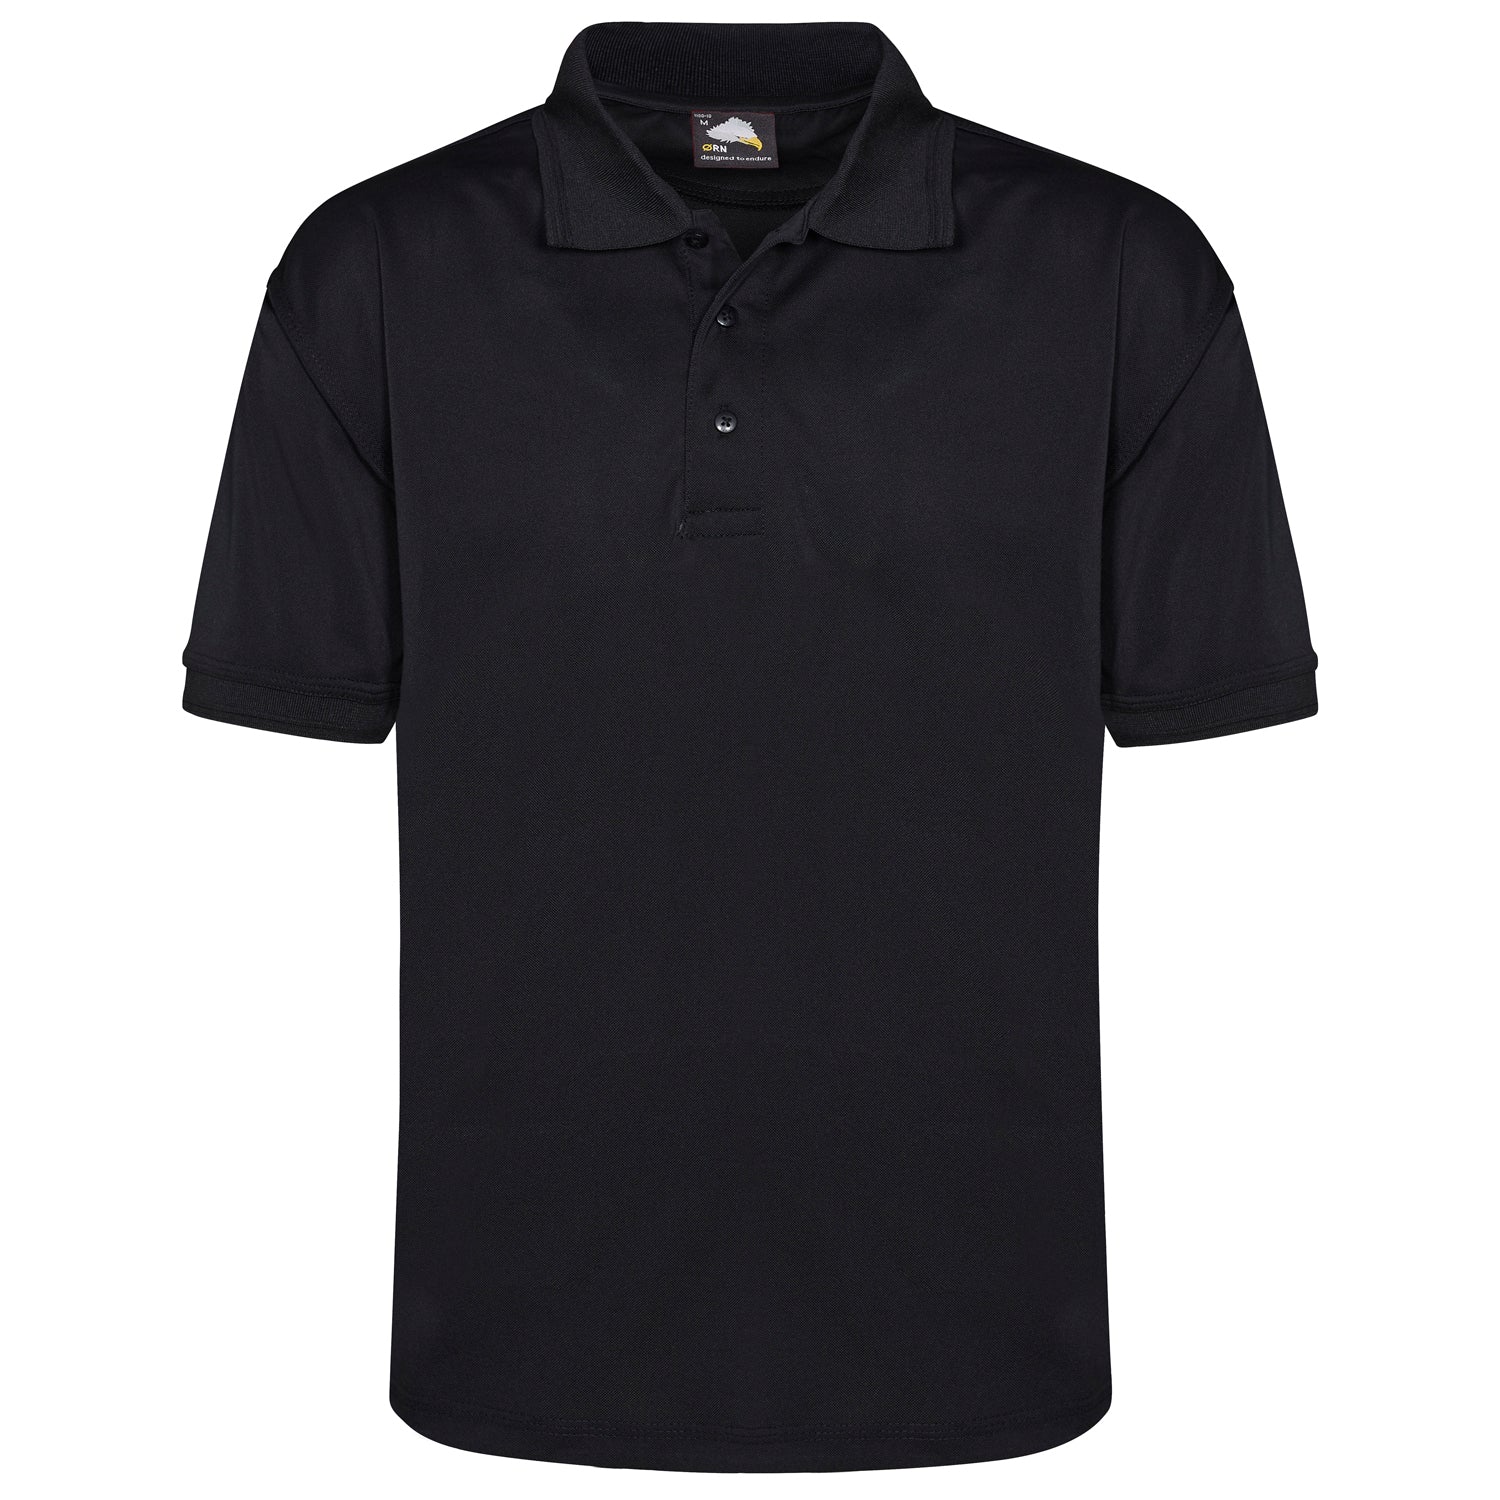 ORN Oriole Wicking Poloshirt - Black